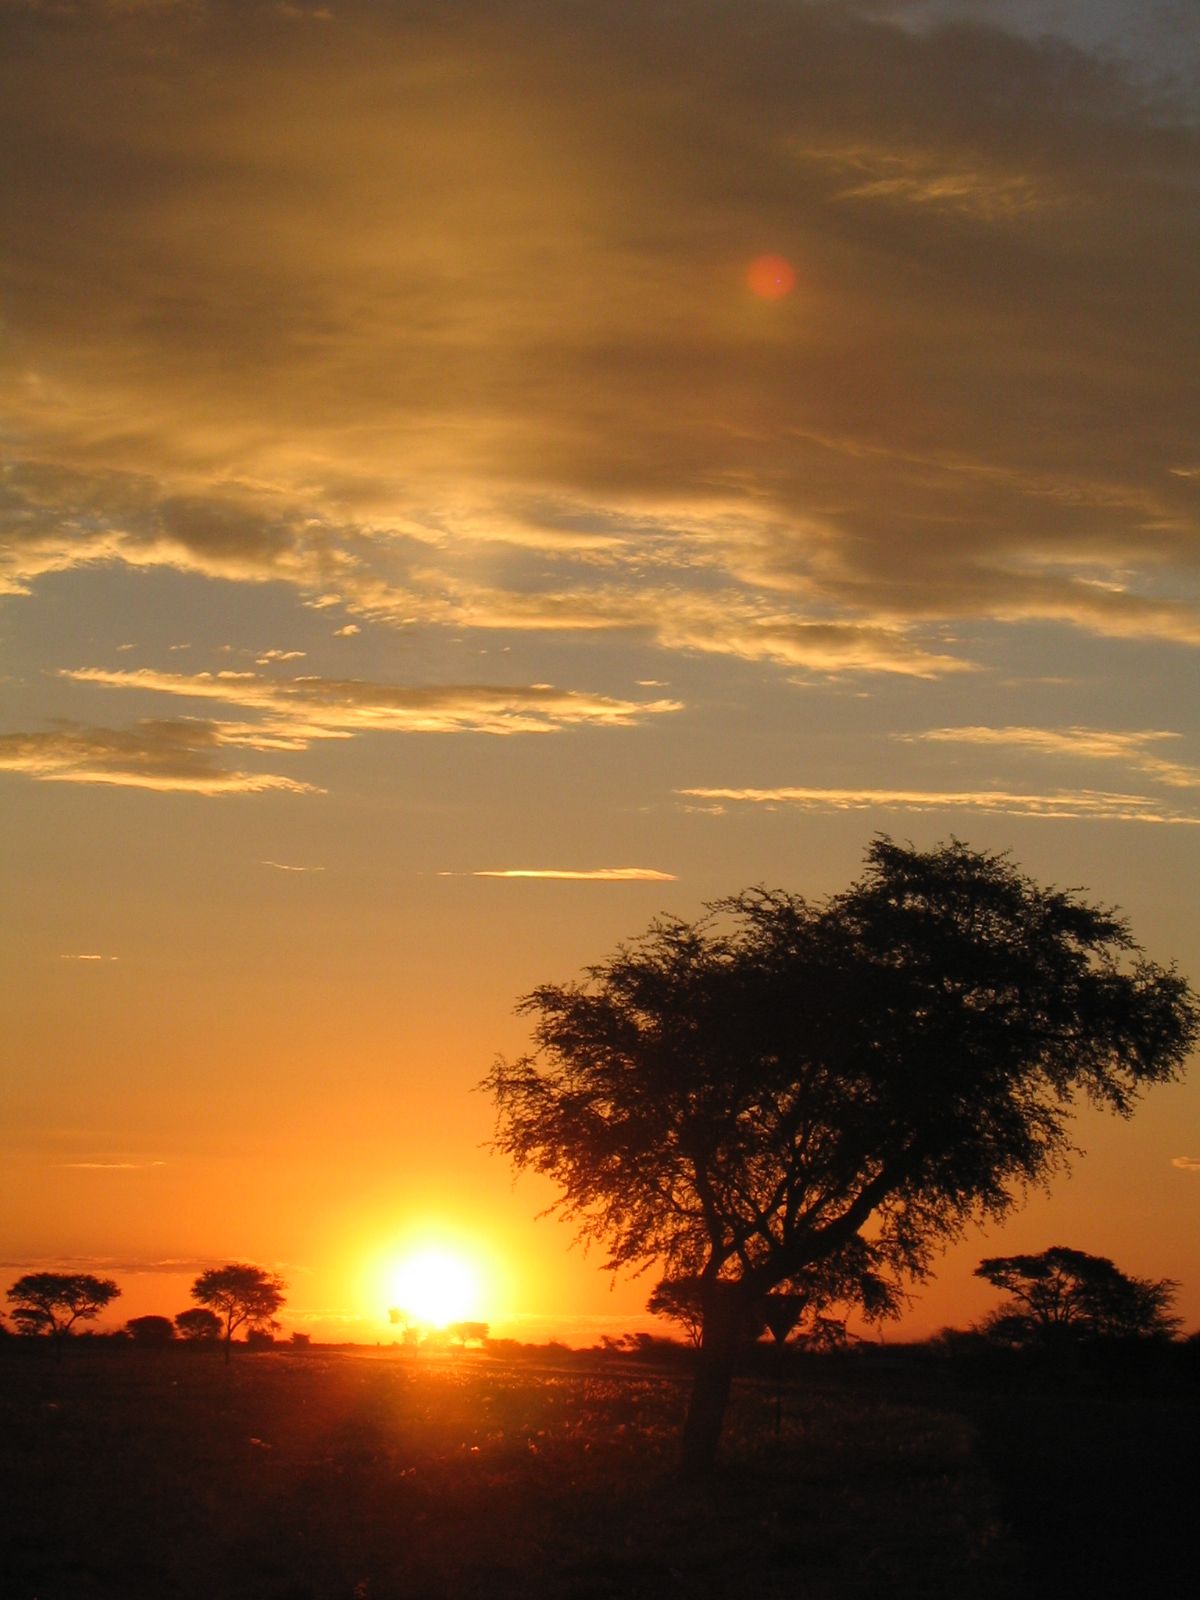 File:Botswana sunset.jpg - Wikimedia Commons